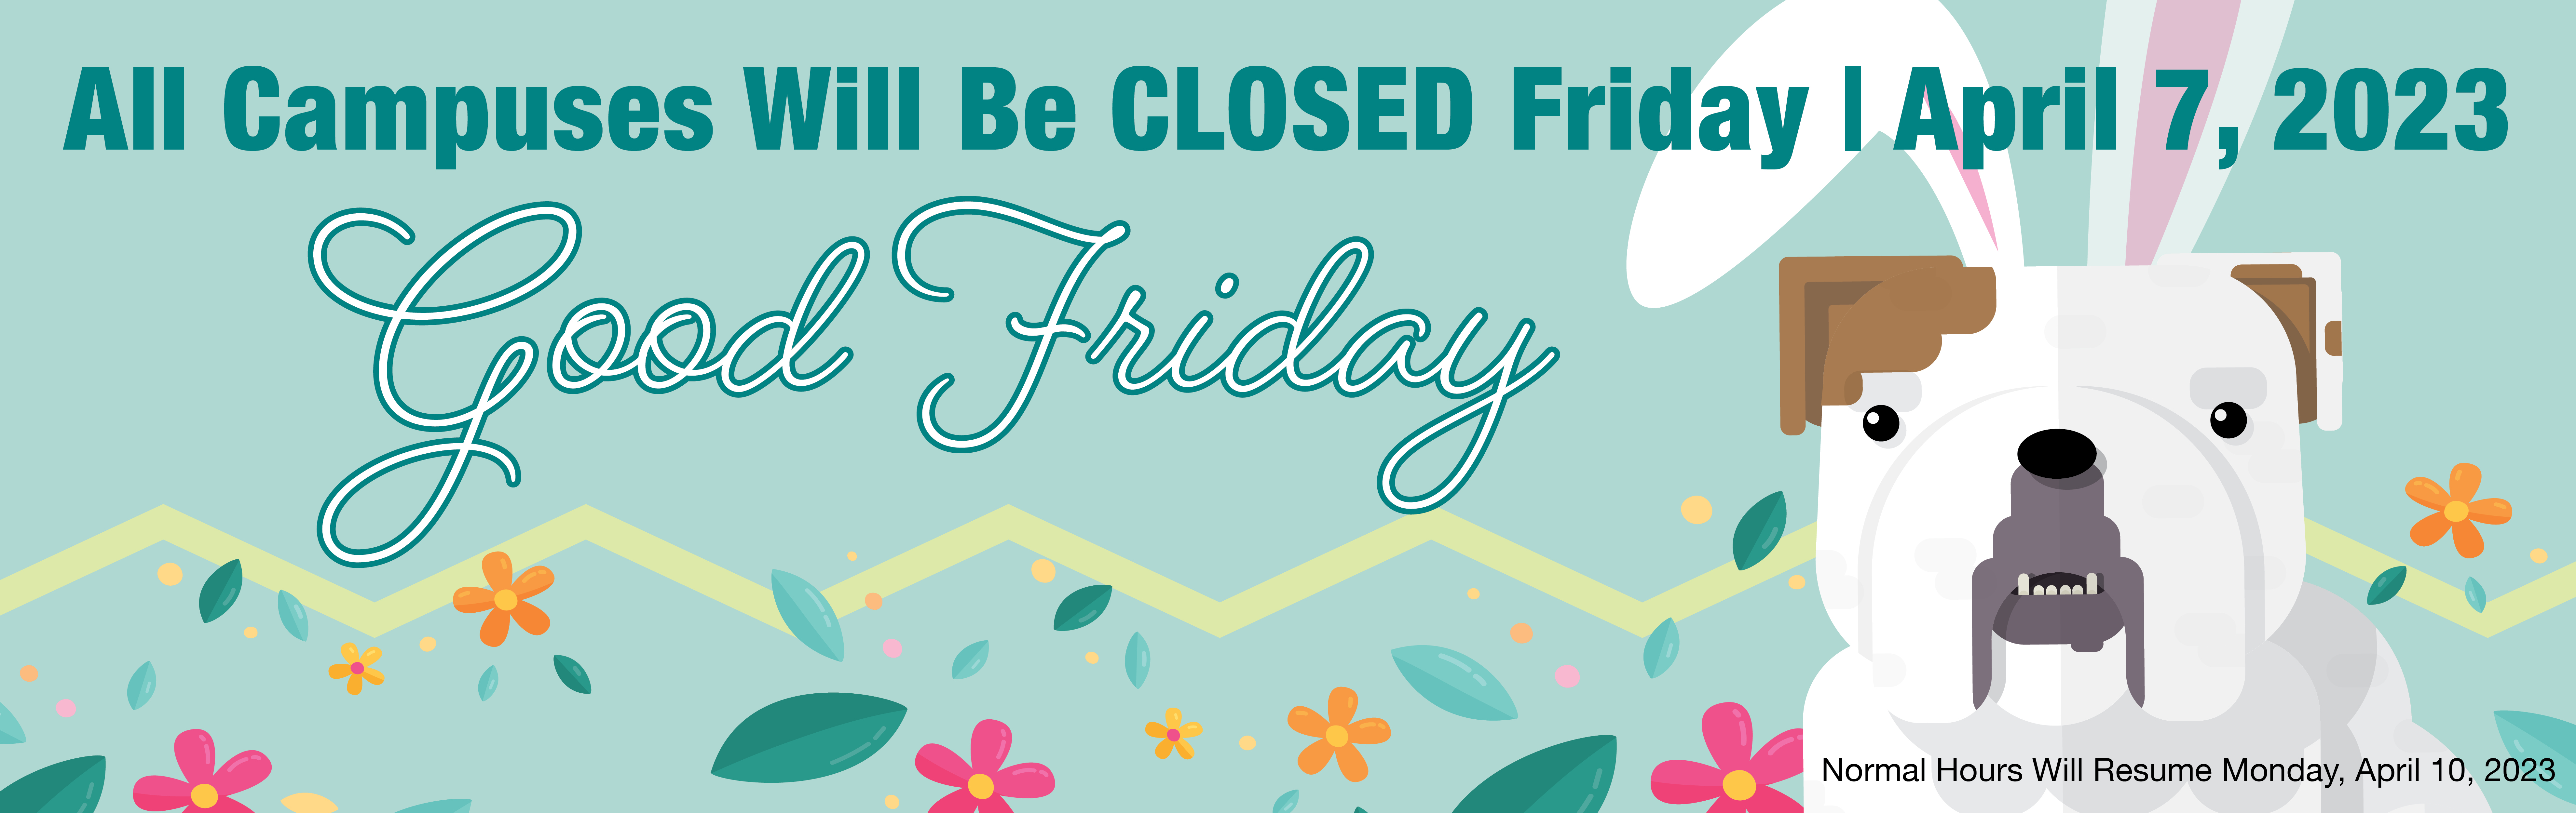 Good Friday Closure